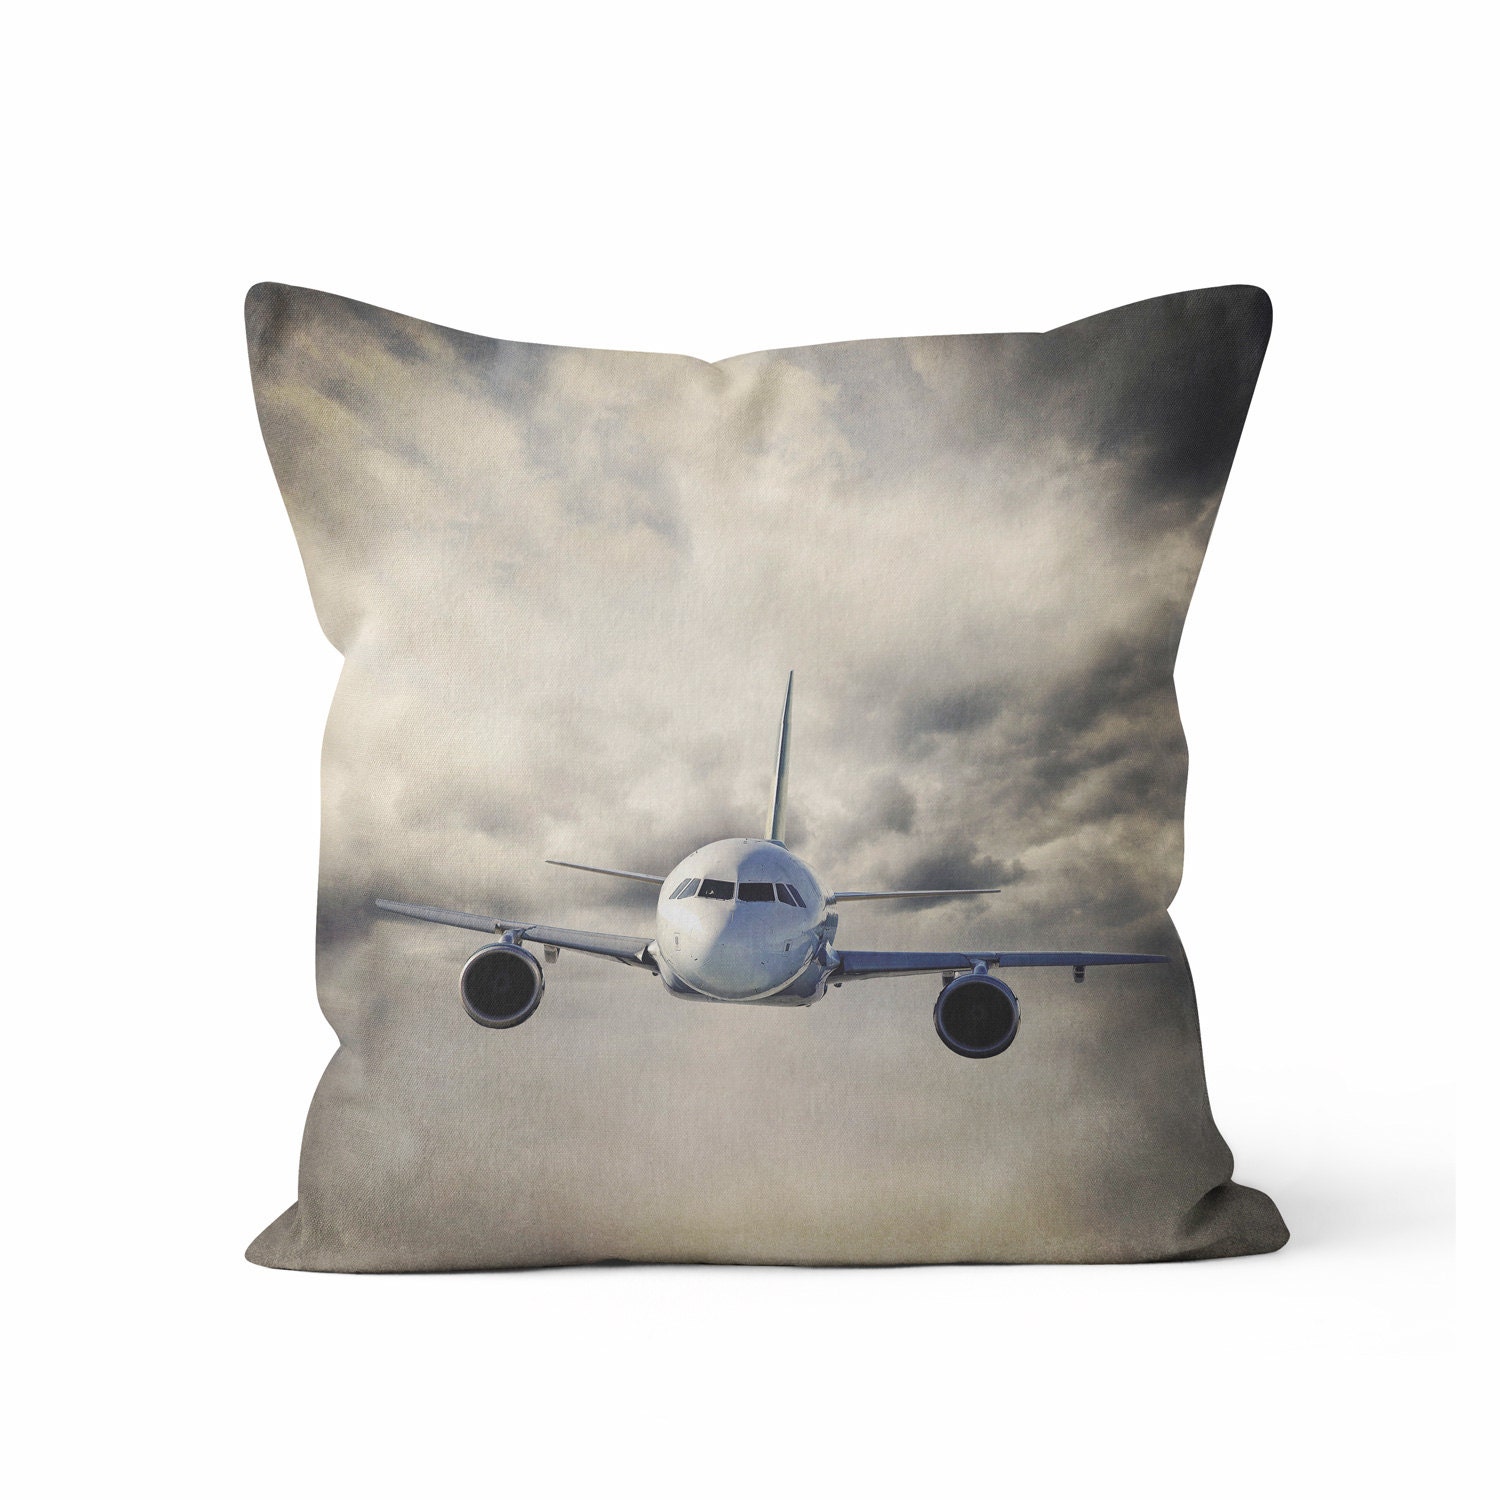 PLANE THROW PILLOW Cloudy Sky Airplane throw pillow Girls